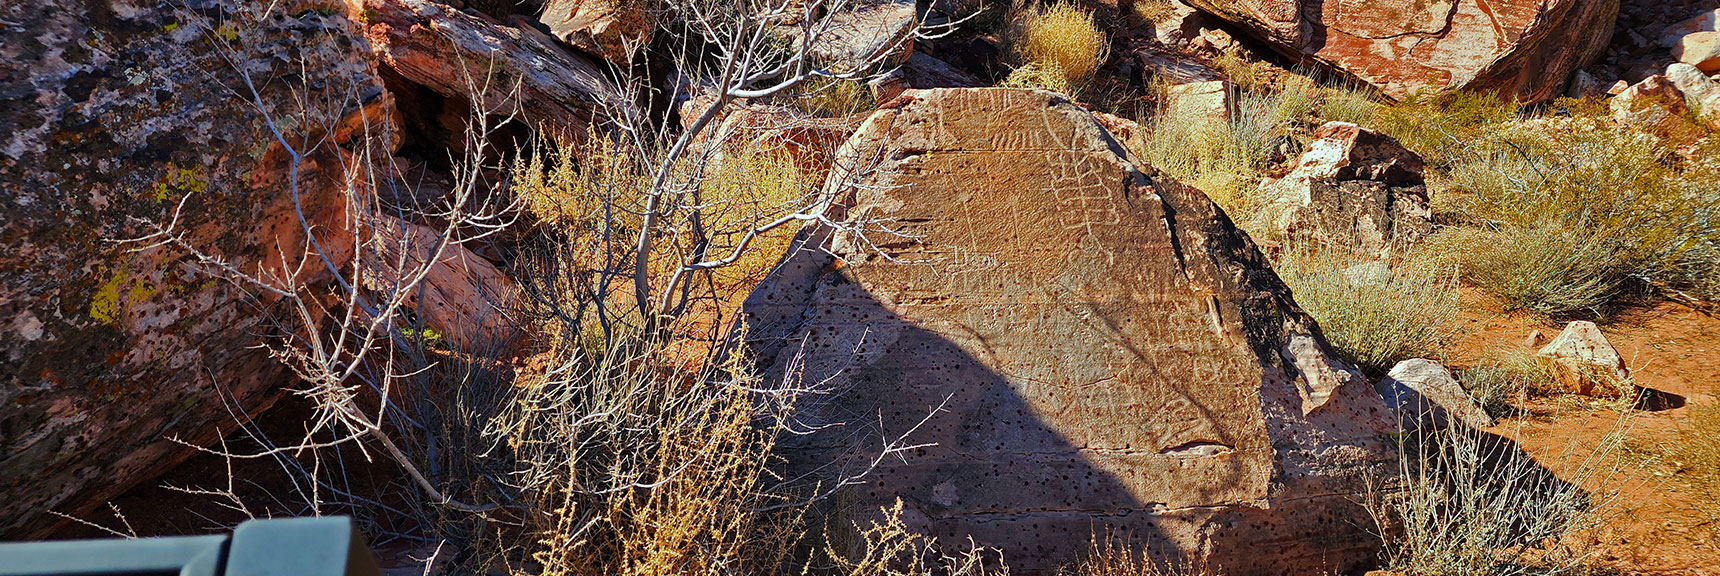 Boardwalk Passes a Fascinating Petroglyph Boulder | Calico Basin Daily Workout Trails | Calico Basin, Nevada